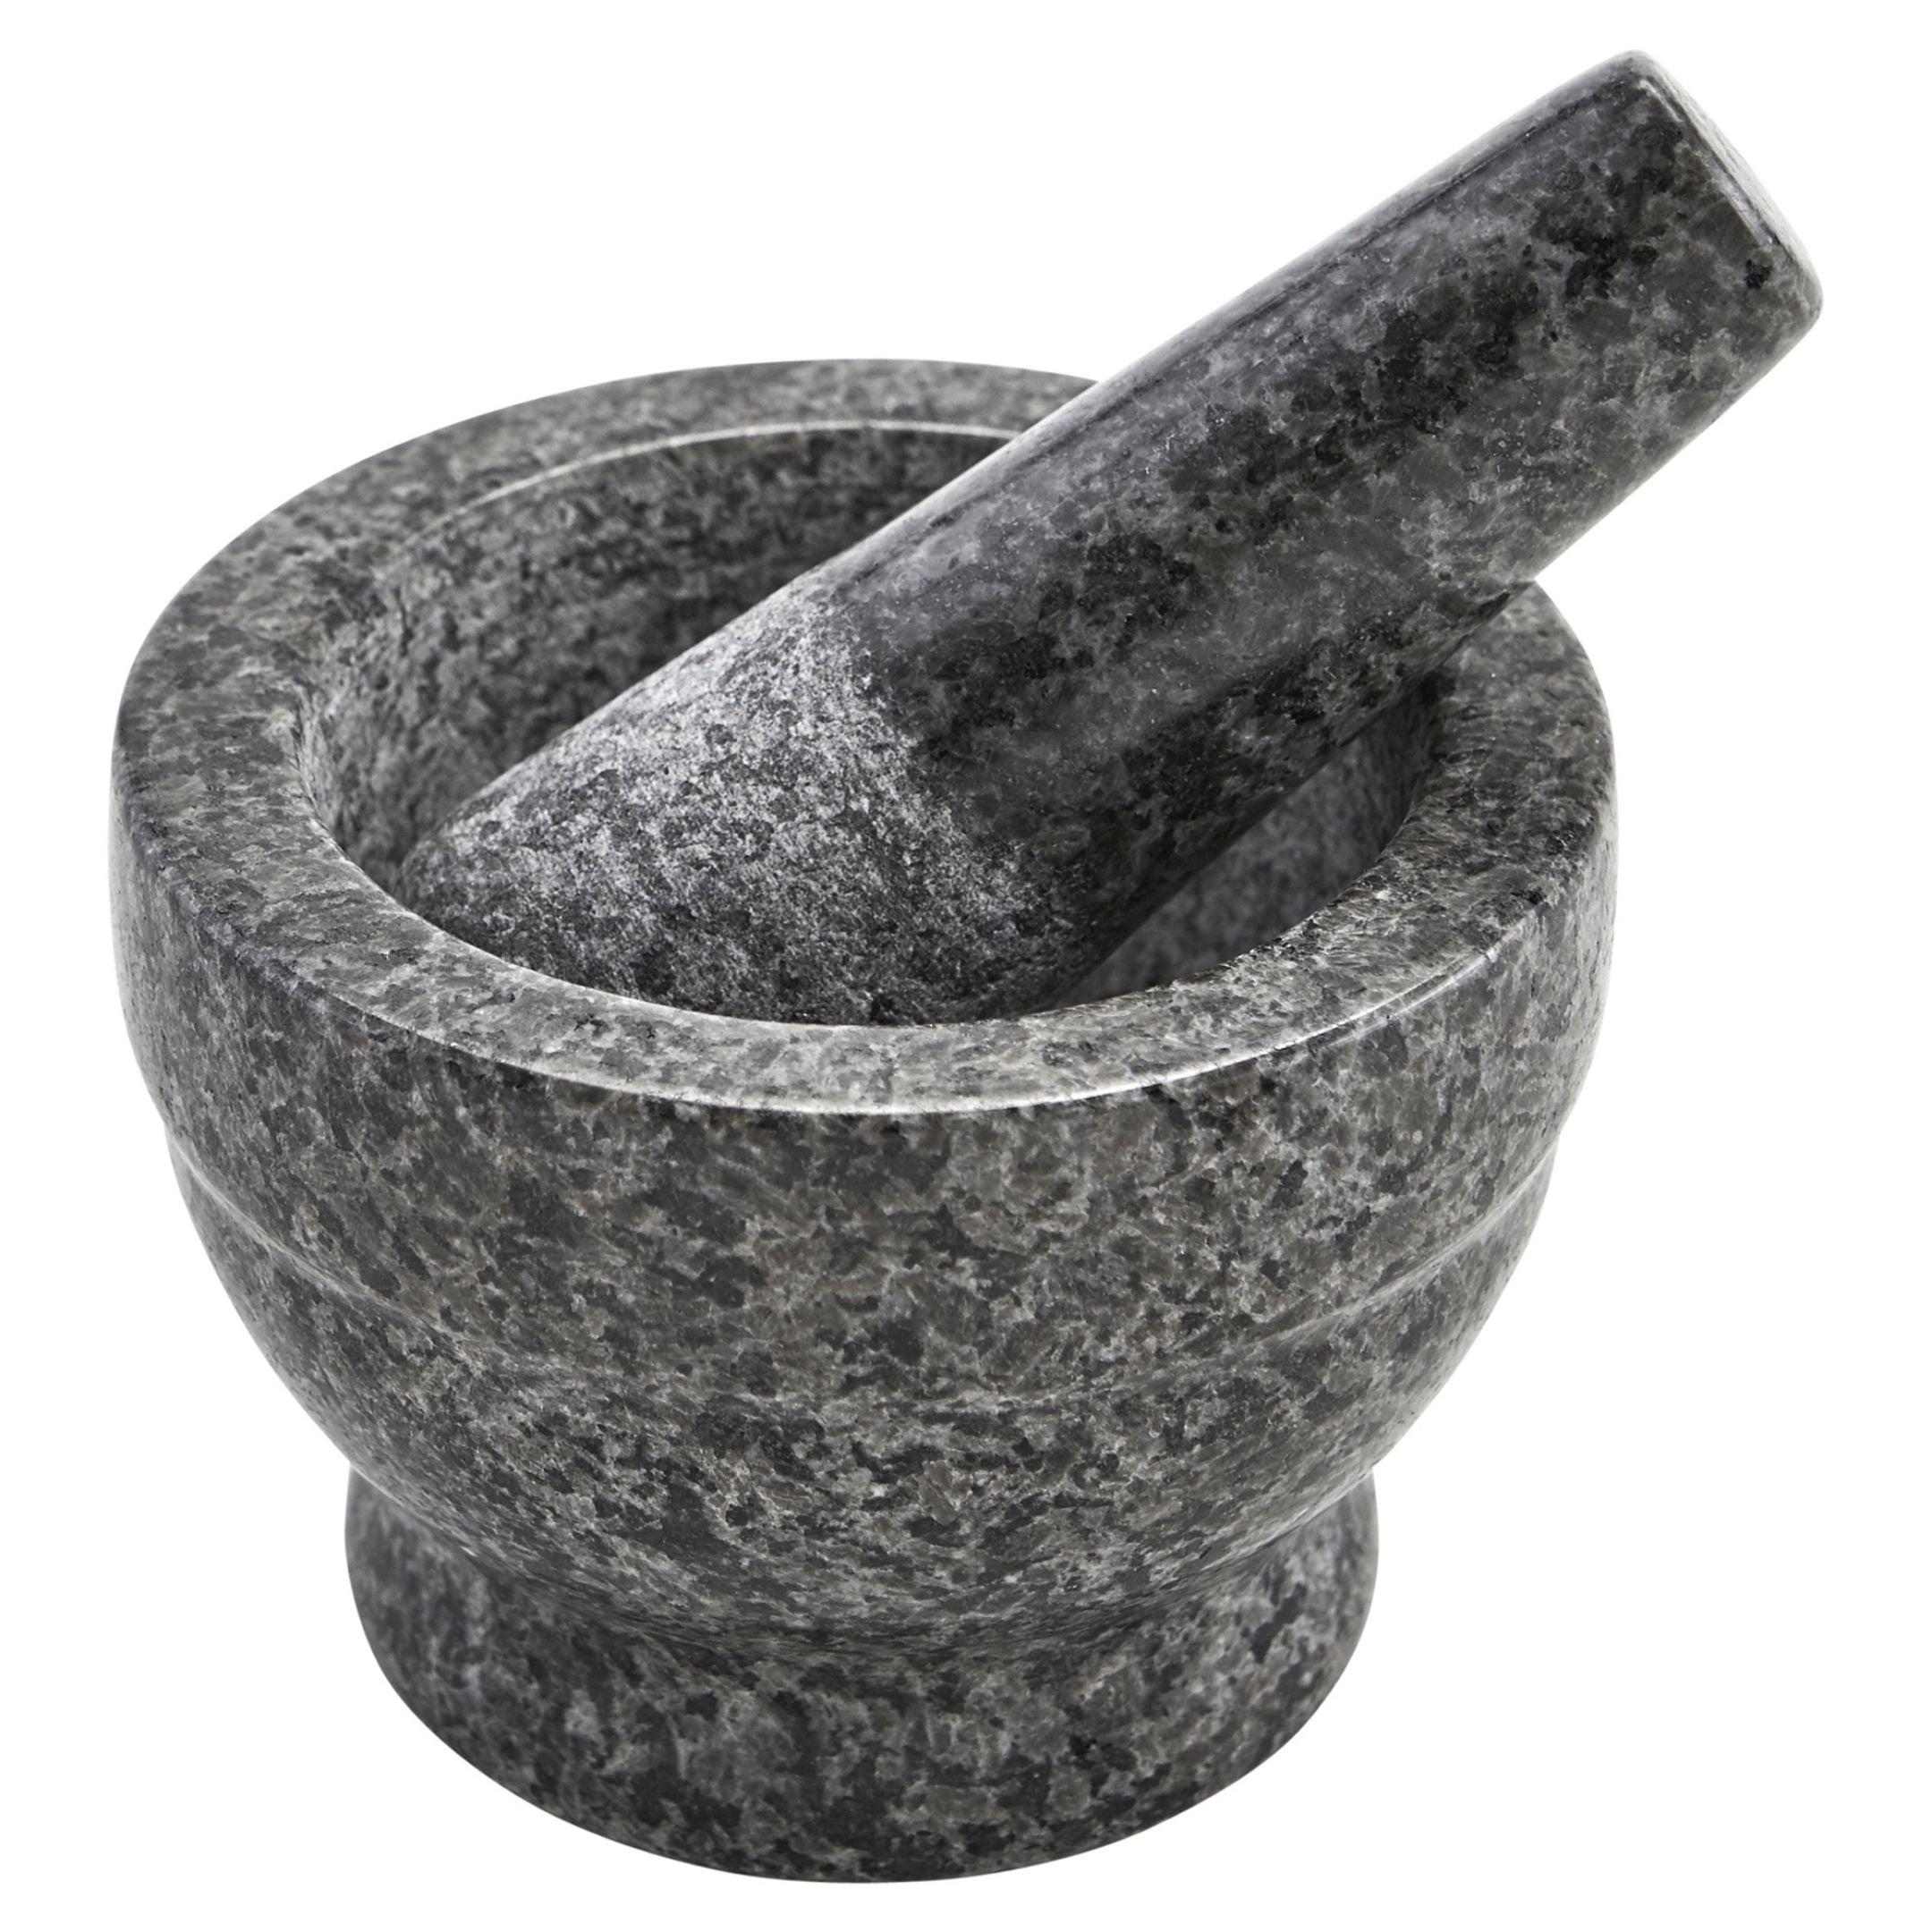 IMUSA 3.75" Polished Gray Colored Granite Mortar and Pestle